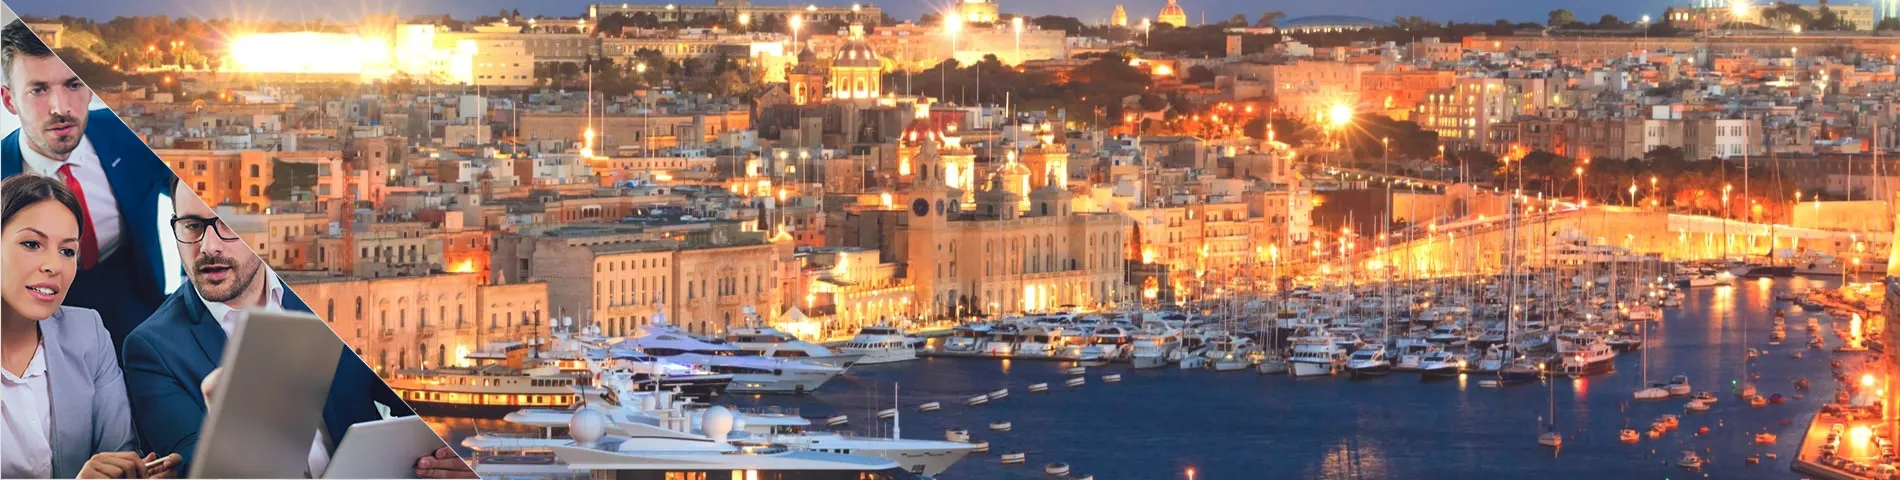 Valletta - Štandard a biznis - kombinovaná skupina